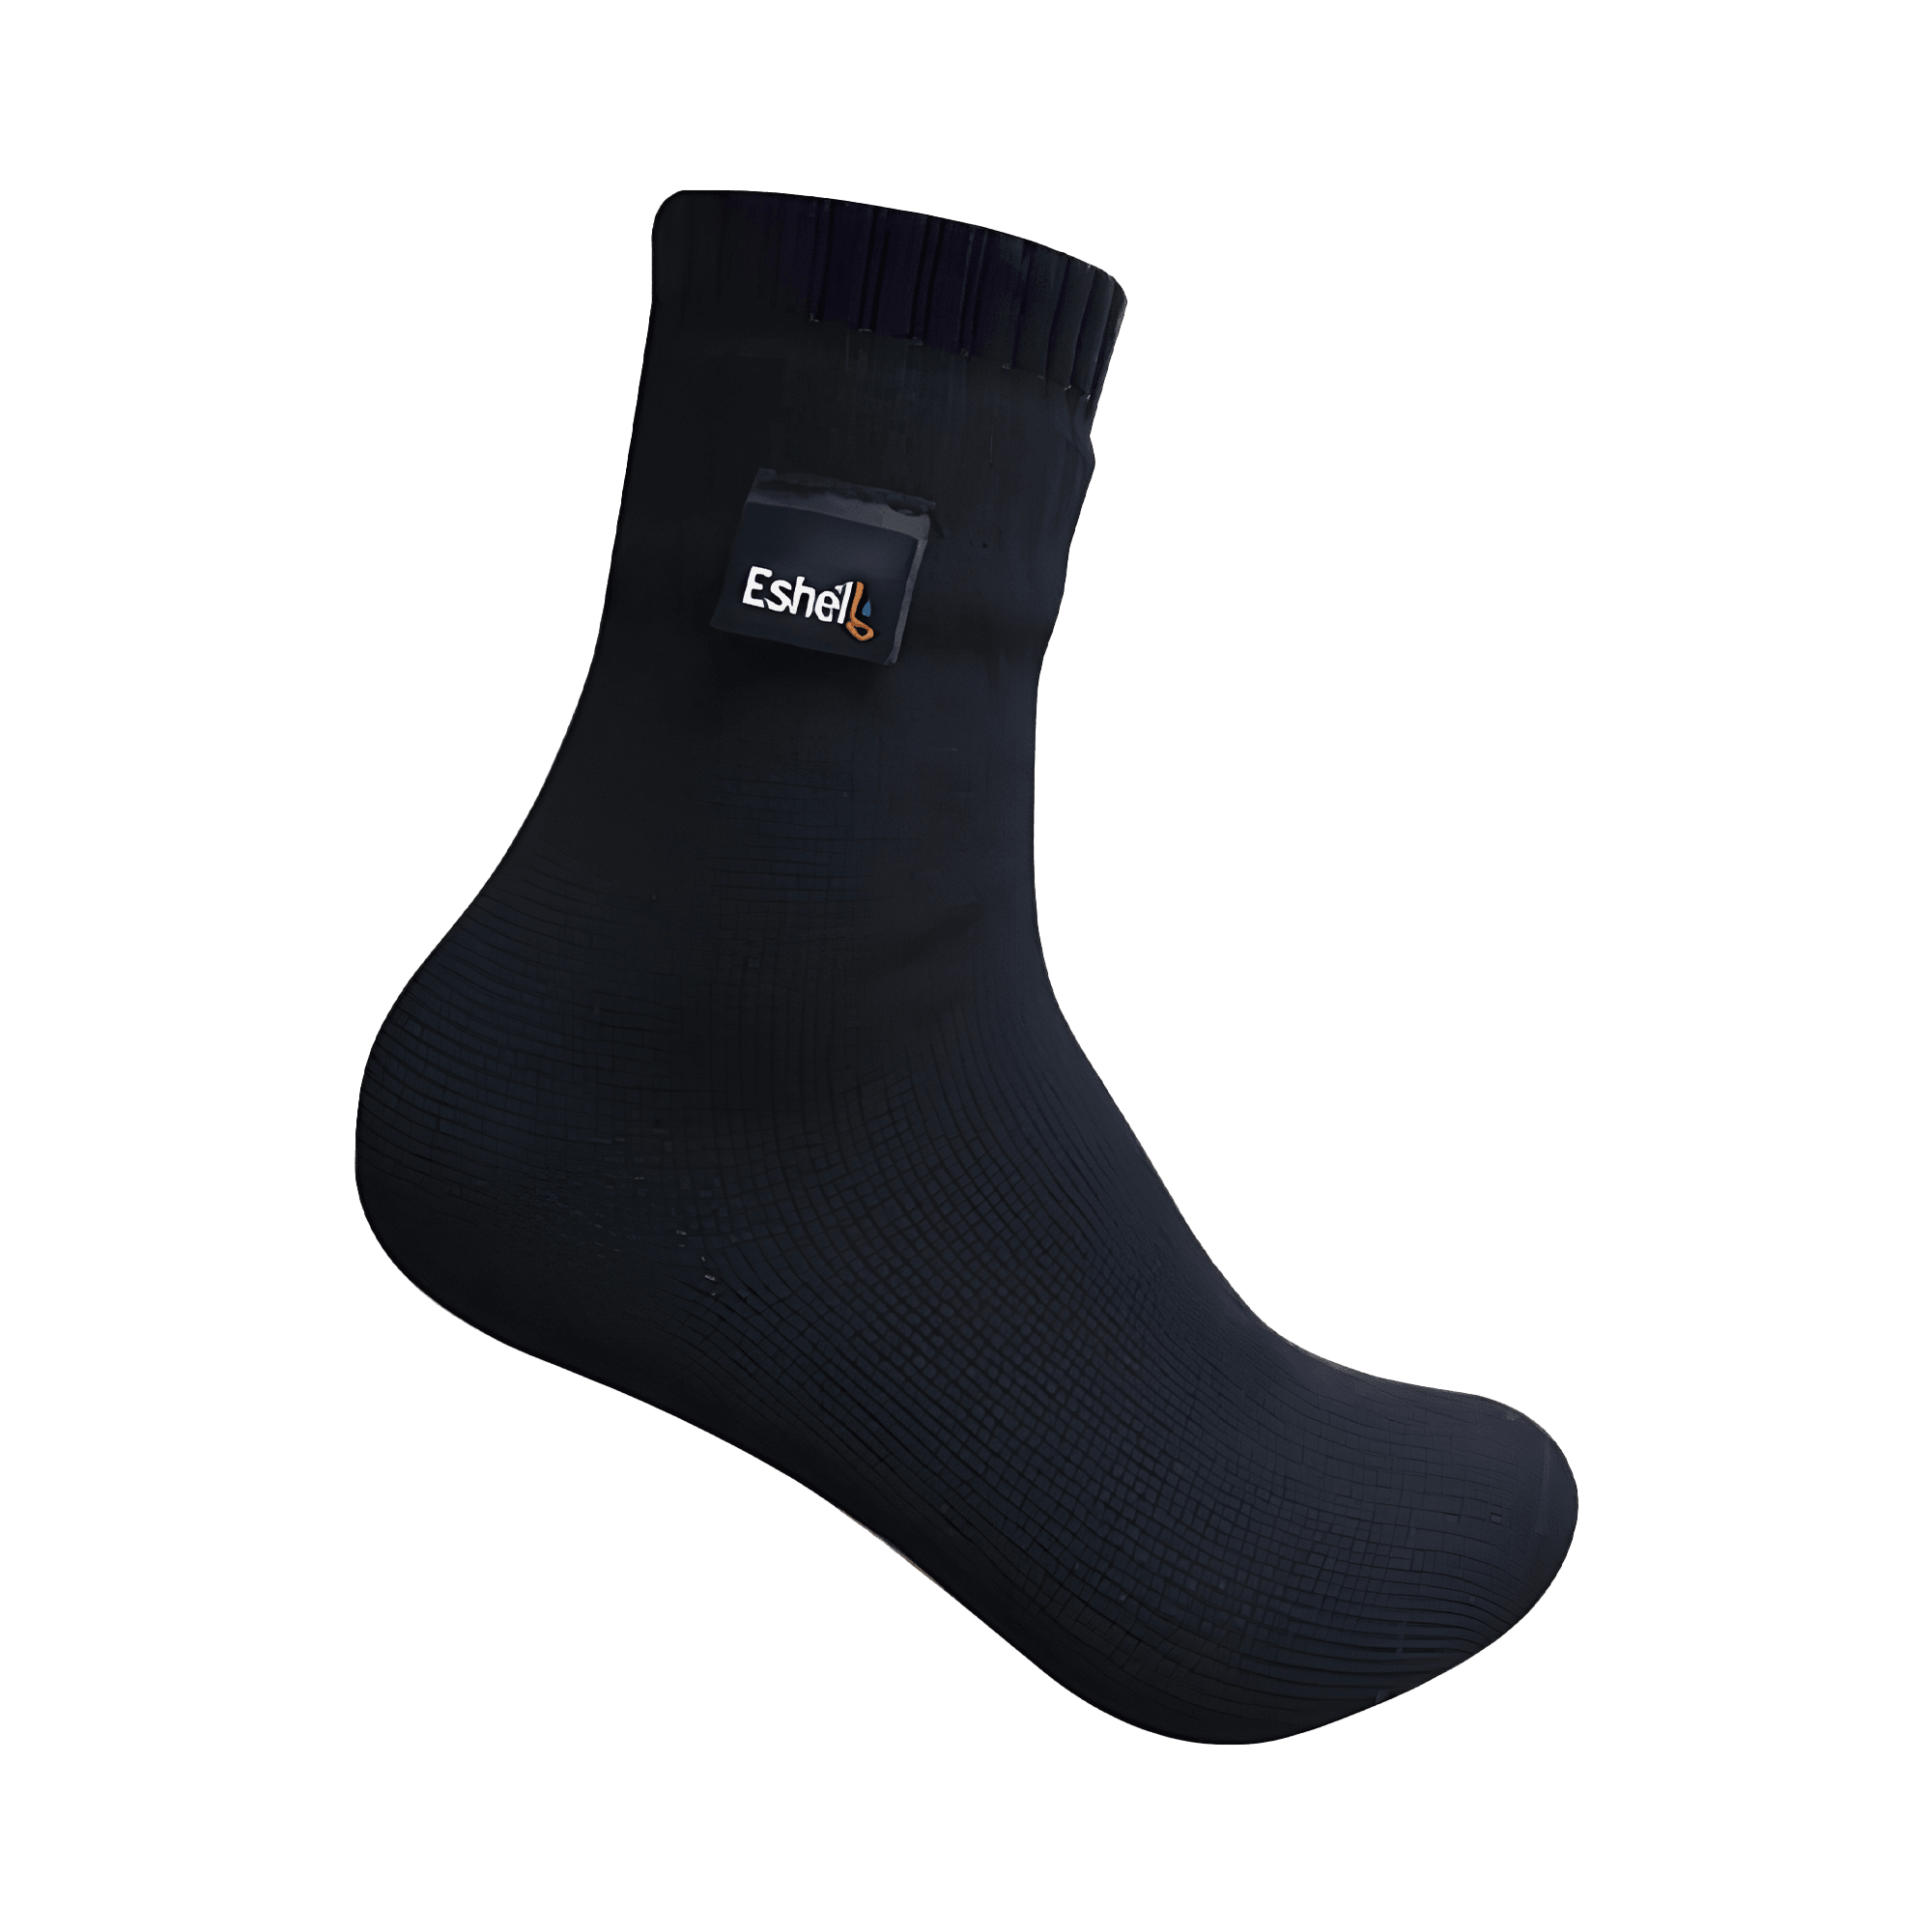 5'li Mest Çorap Siyah, Nefes Alan Su Geçirmez Çorap, Abdest Çorabı, Spor Çorabı, Çorap Mest